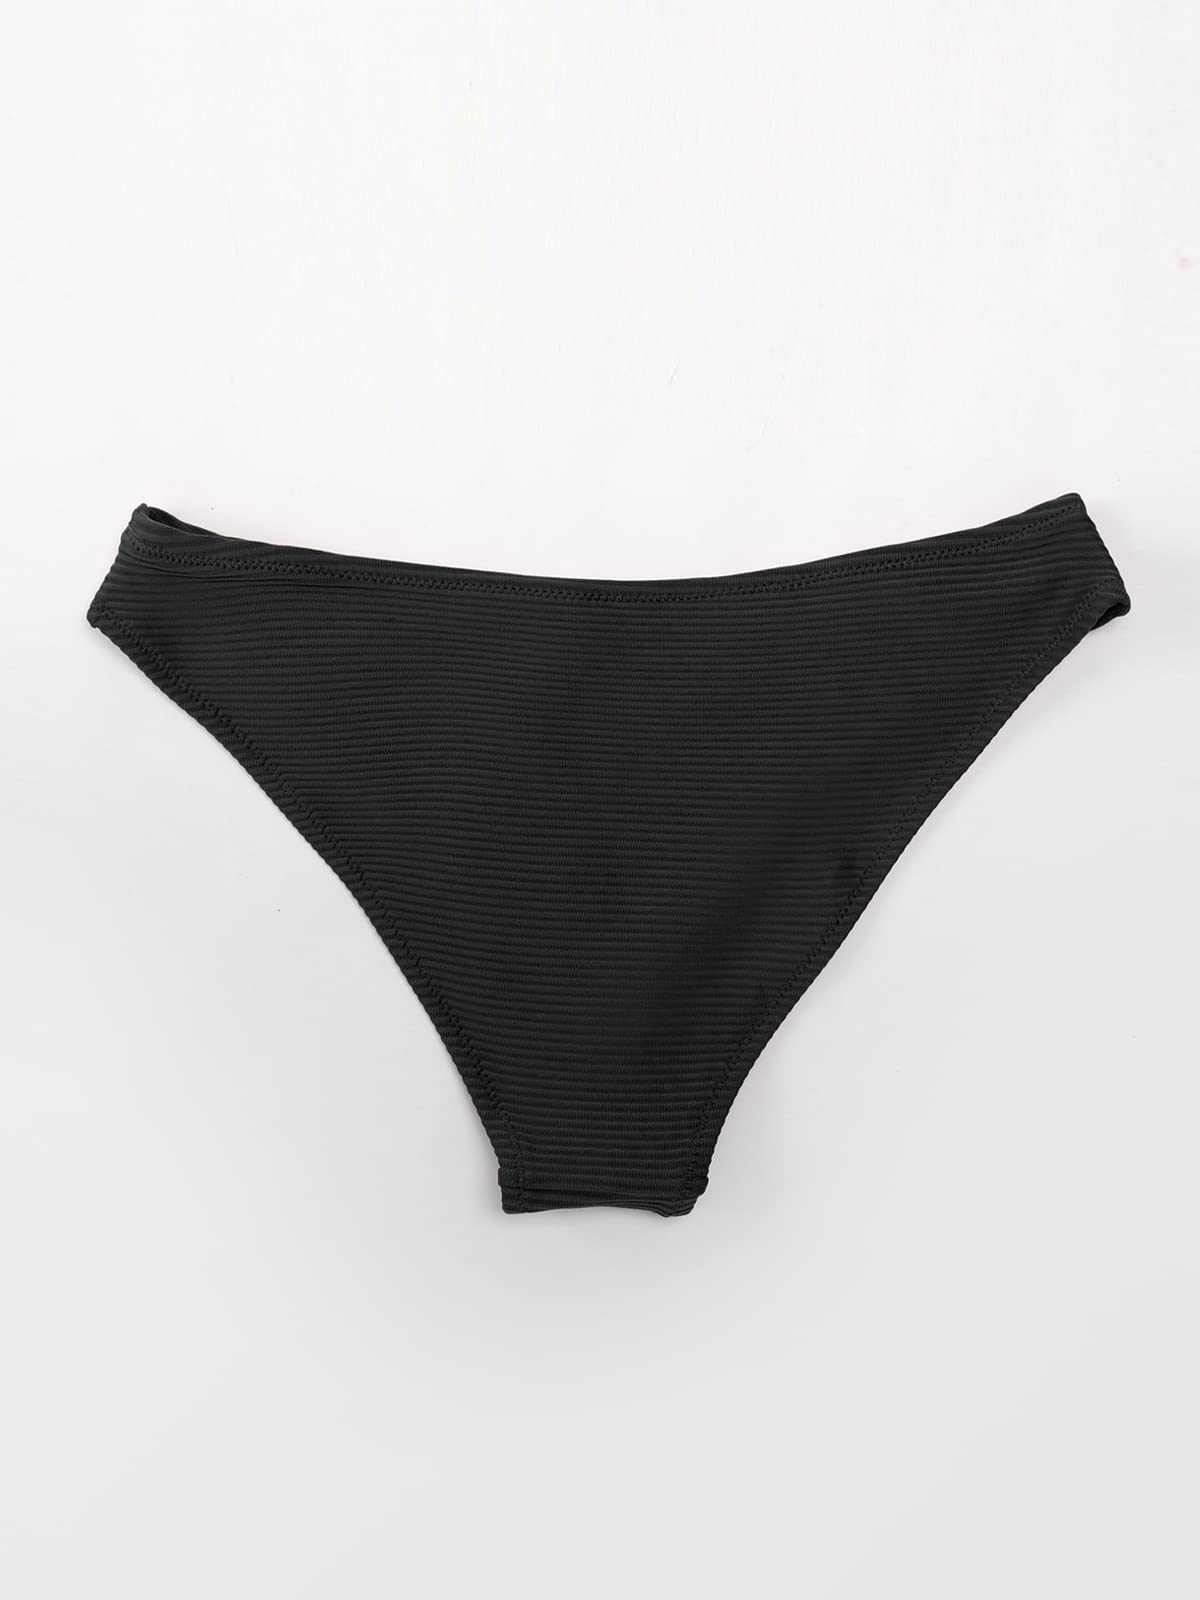 CUPSHE Swimsuit for Women Bathing Suit Triangle Bikini Top Low Waist Bikini Bottom, M